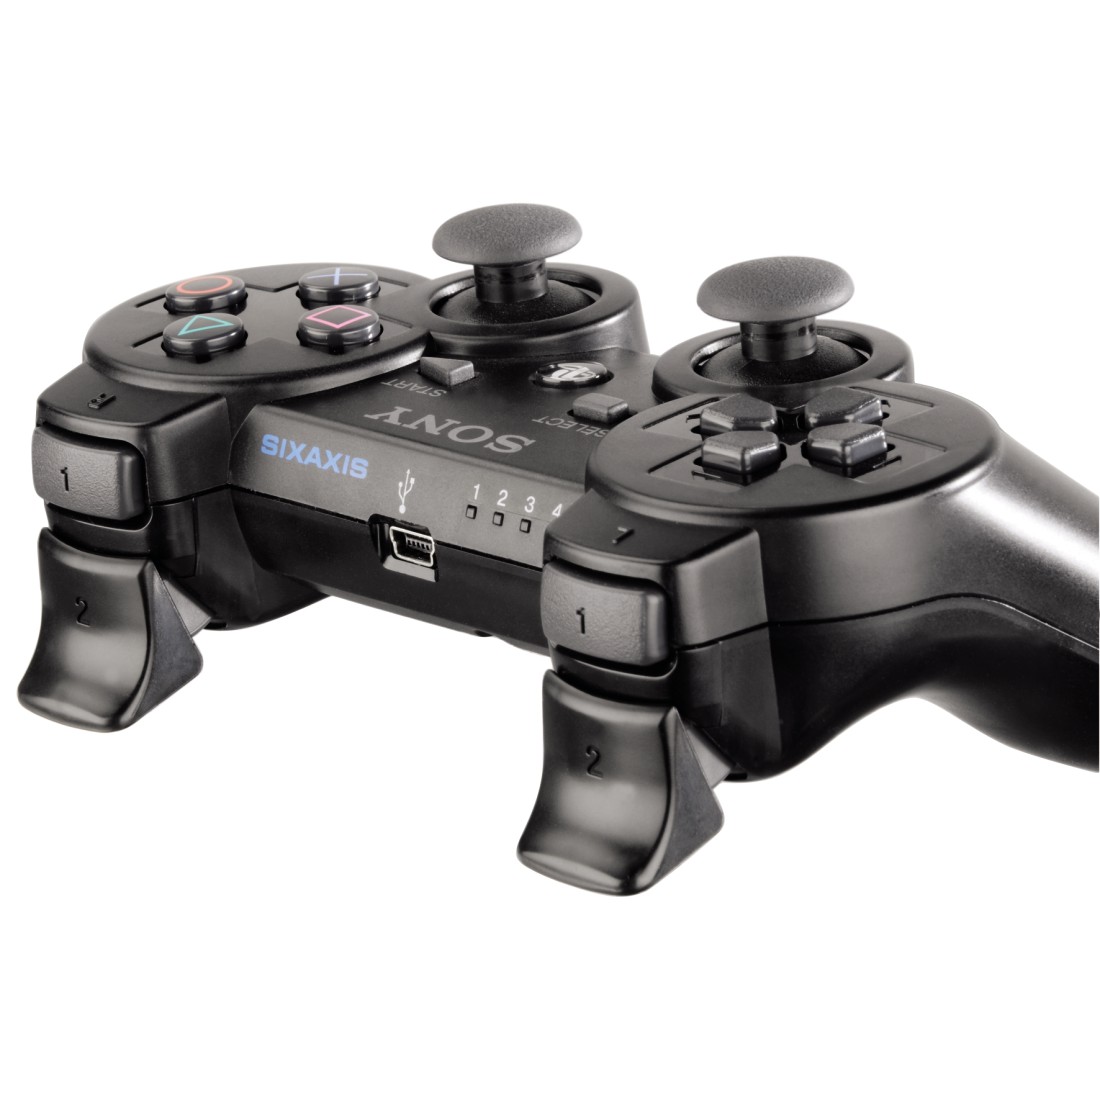 00051844 Hama 4 Trigger Attachments for Sony PS3 Controller | hama.com